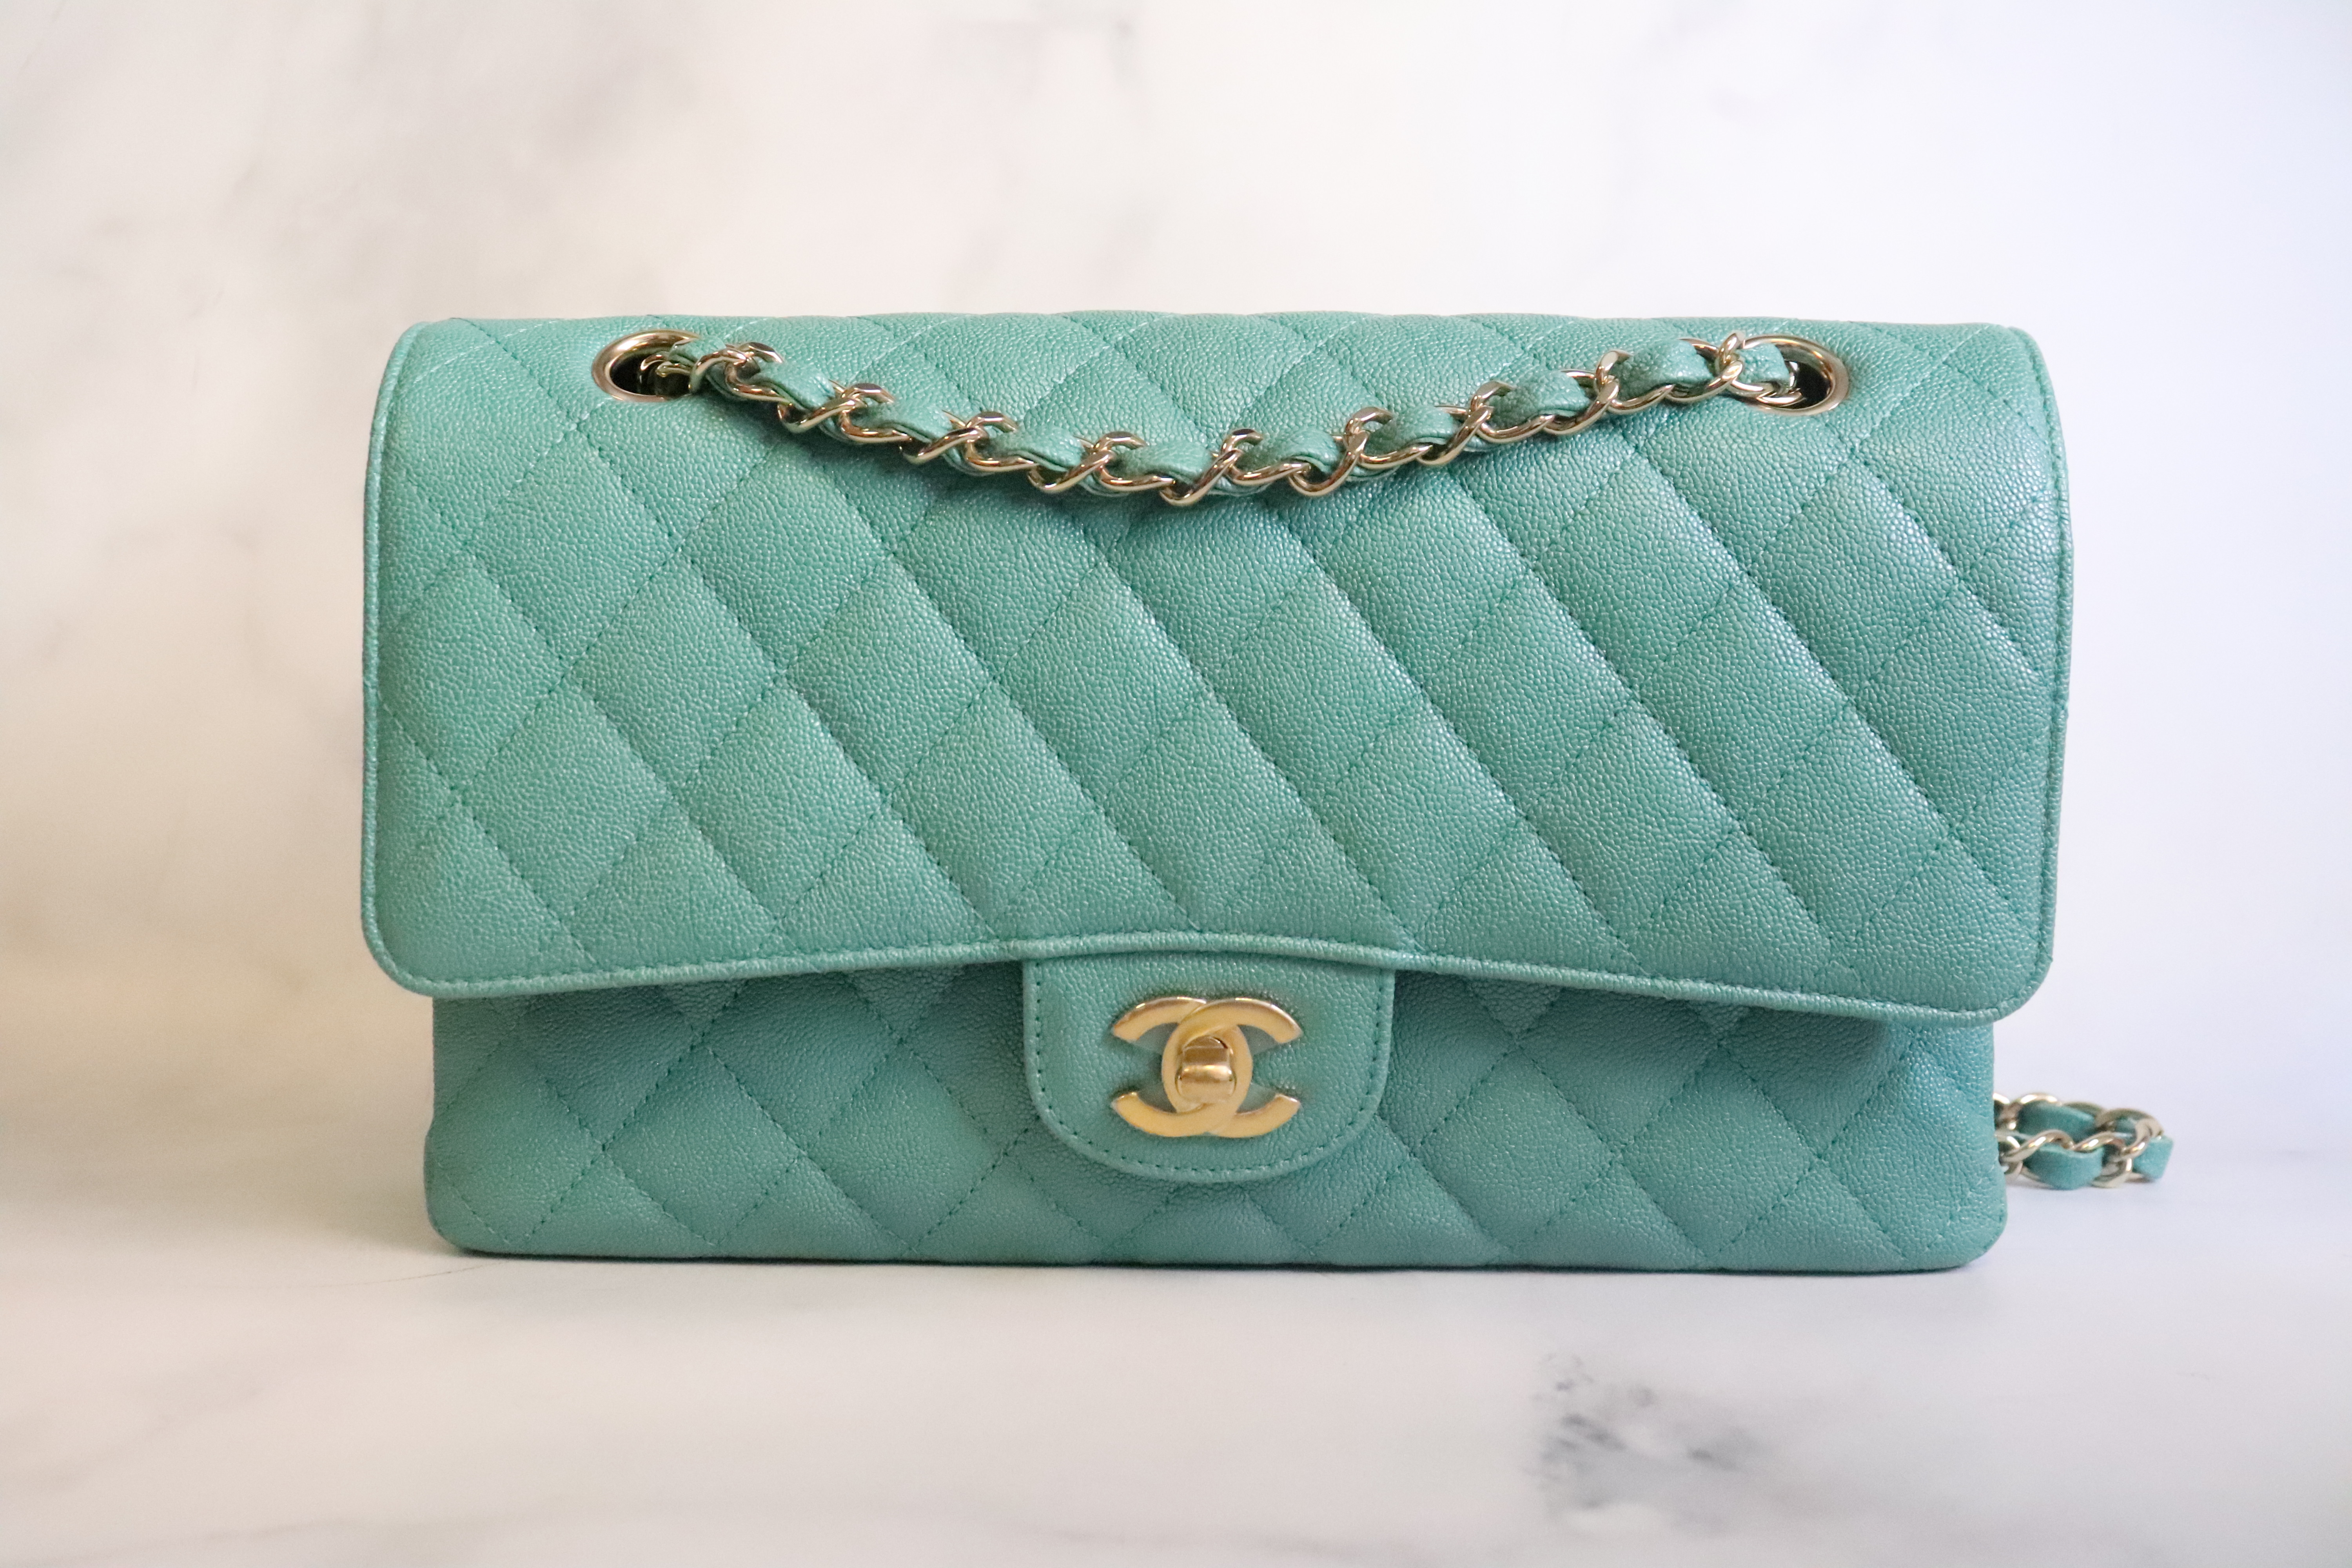 Chanel Classic Medium Double Flap, 19S Turquoise Green Iridescent